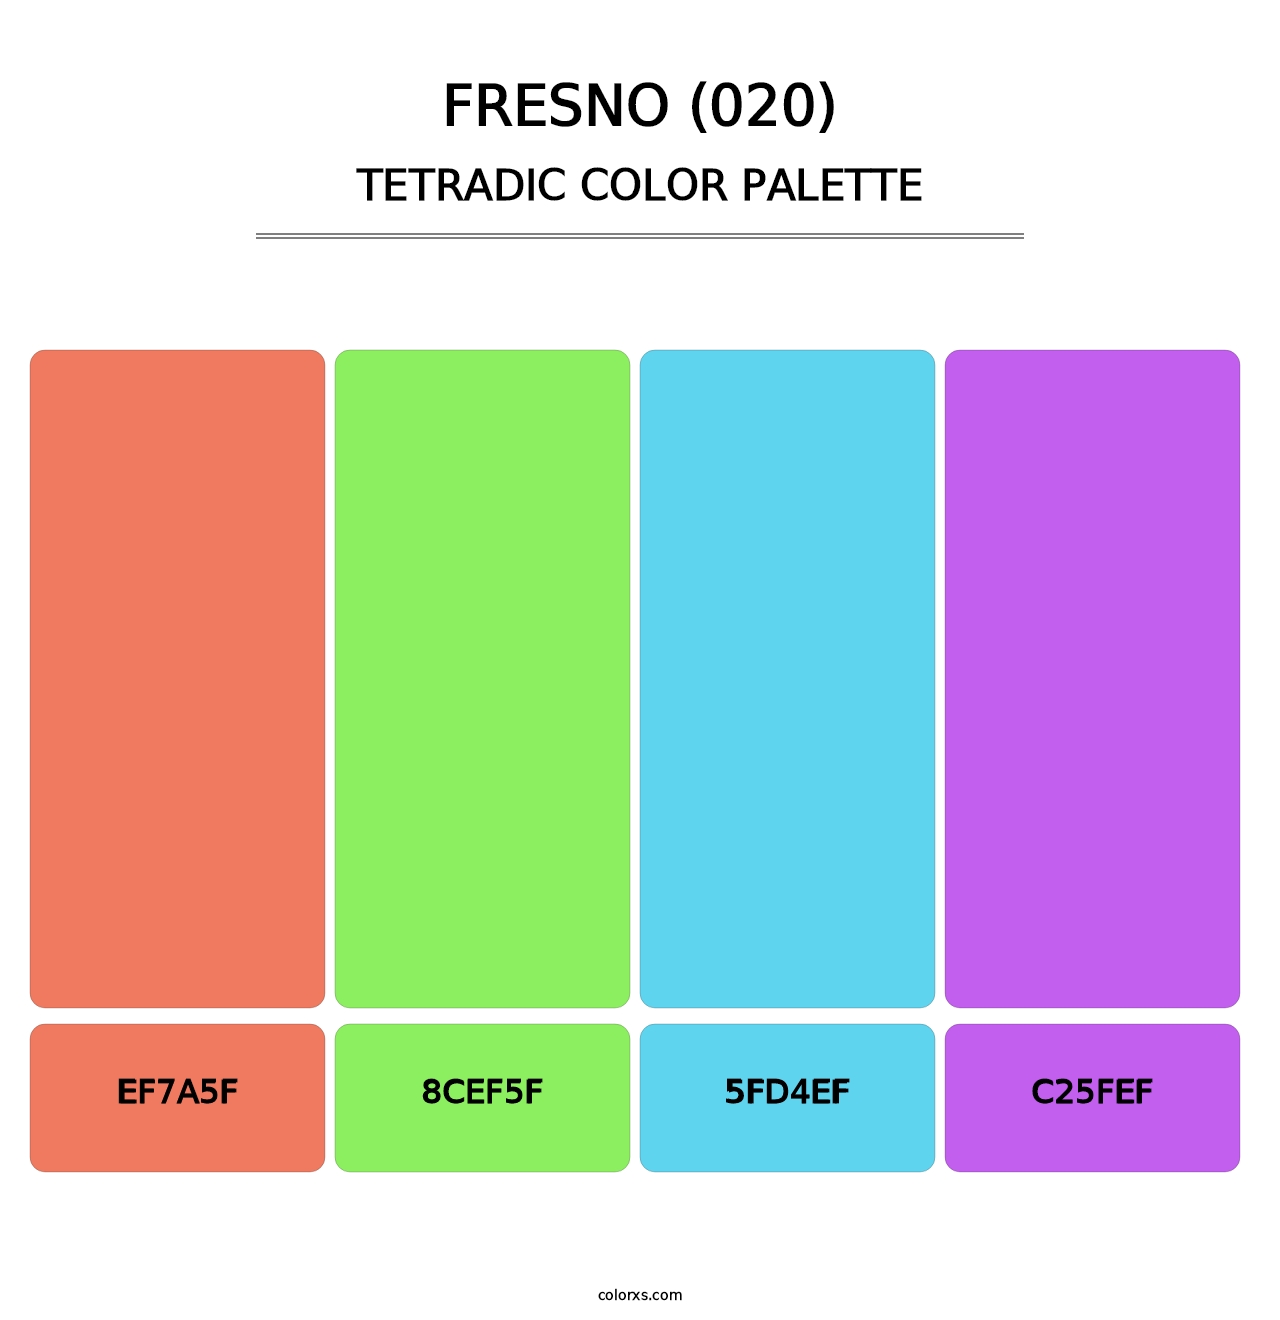 Fresno (020) - Tetradic Color Palette